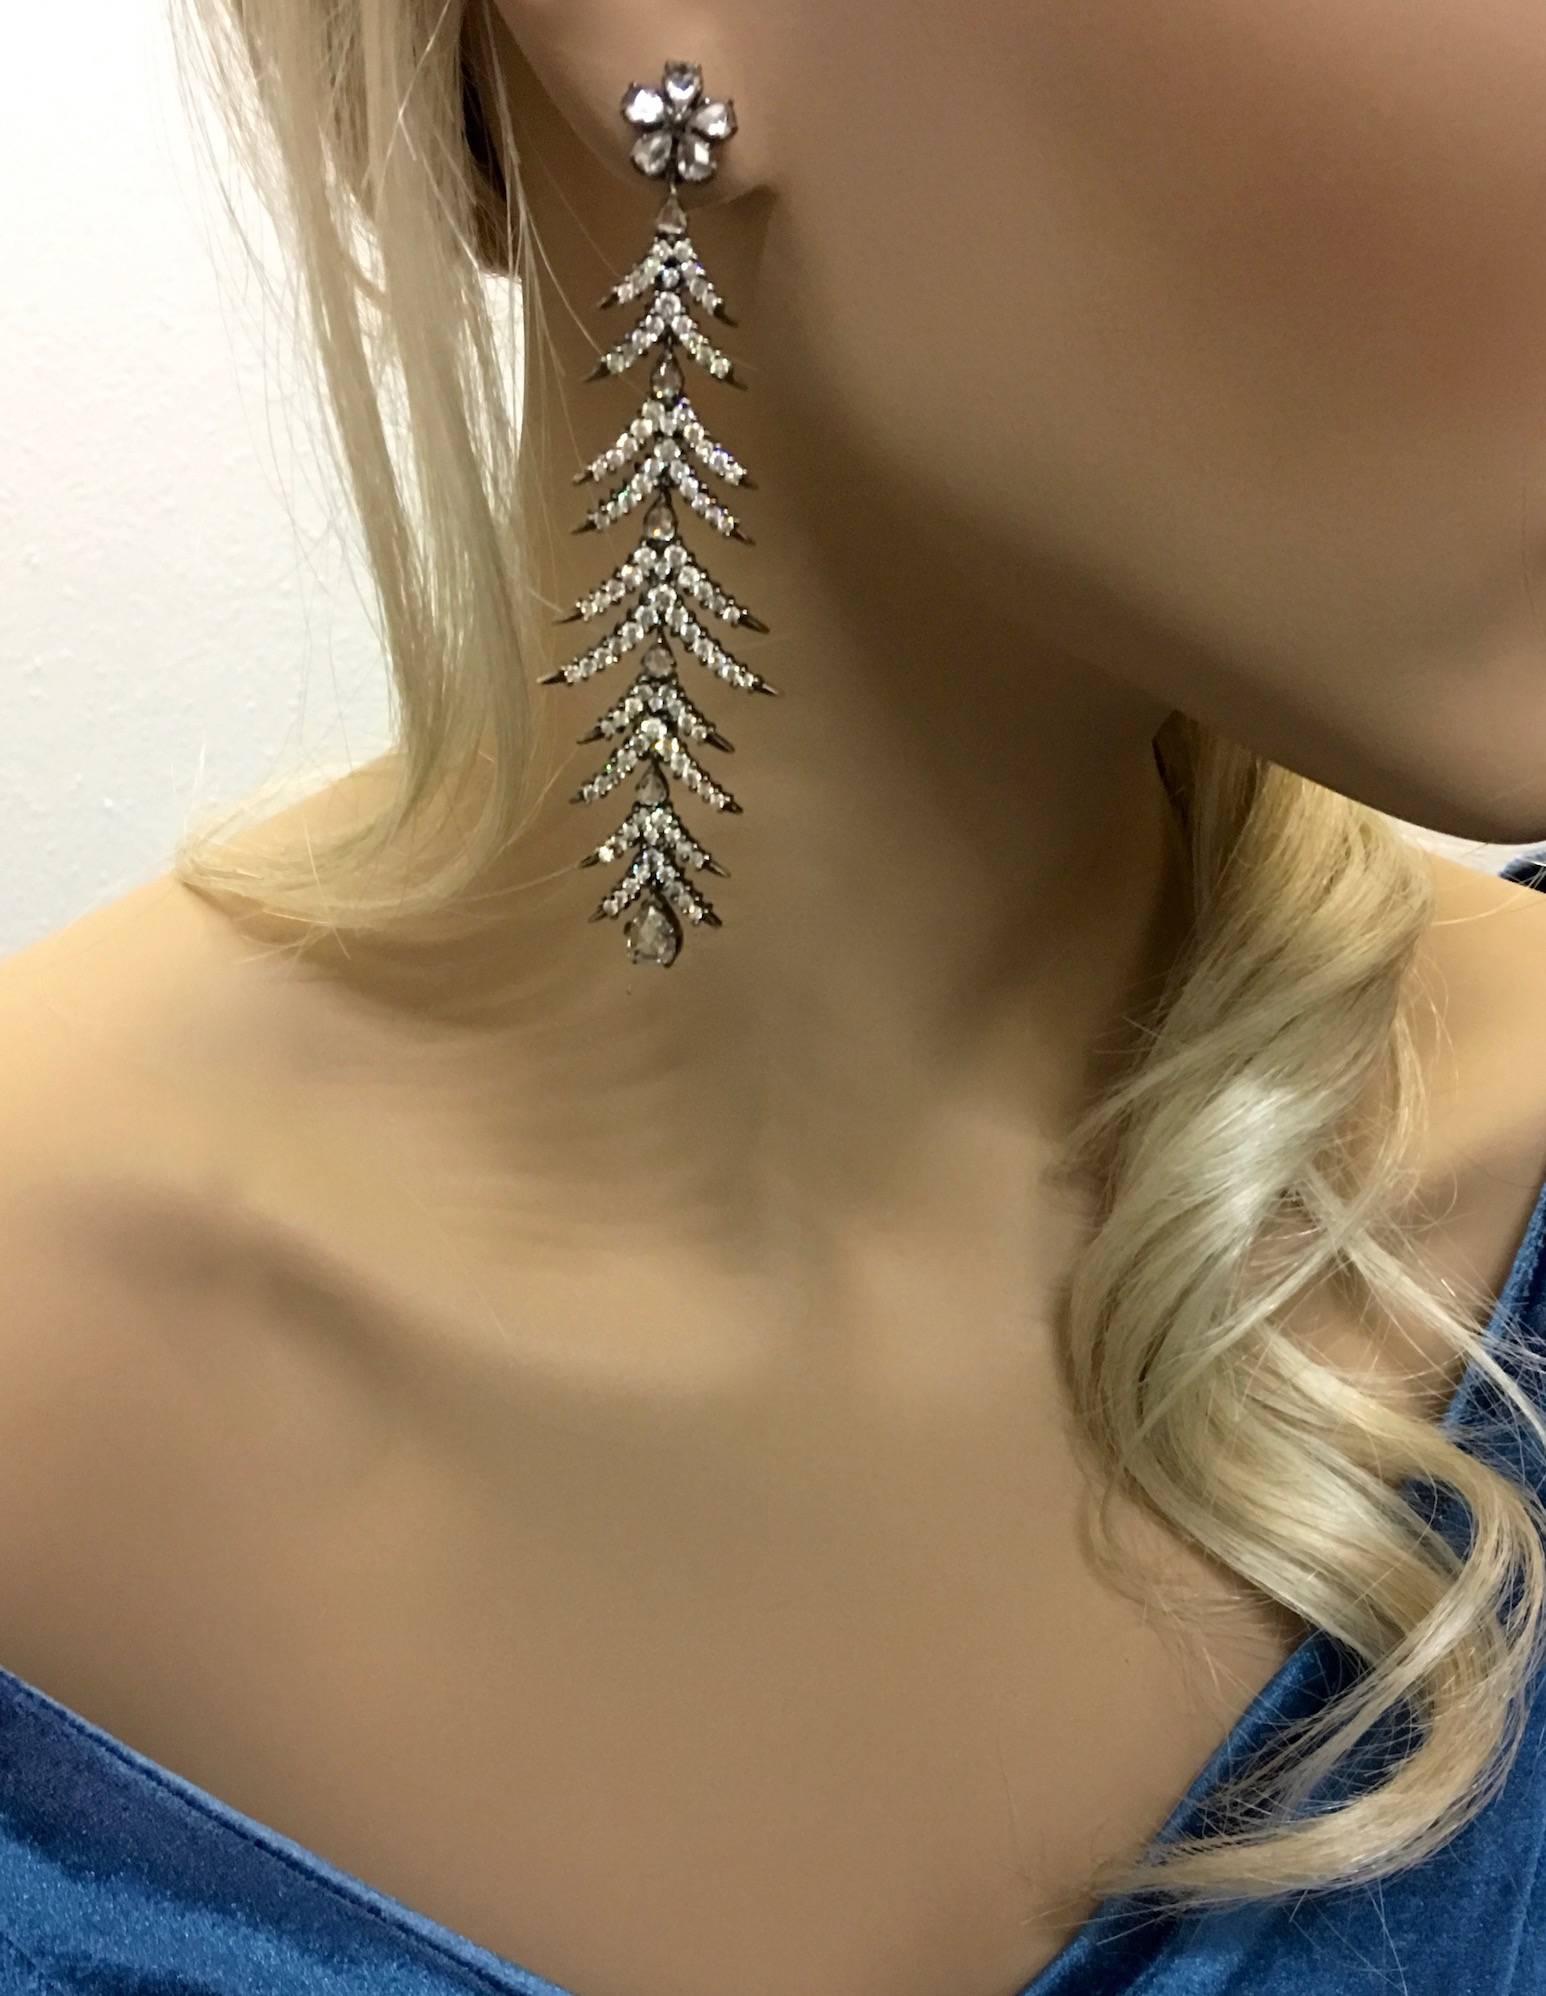 Diamond and Rose-cut Diamond on Black Gold Earrings Pendants.
Significant length.